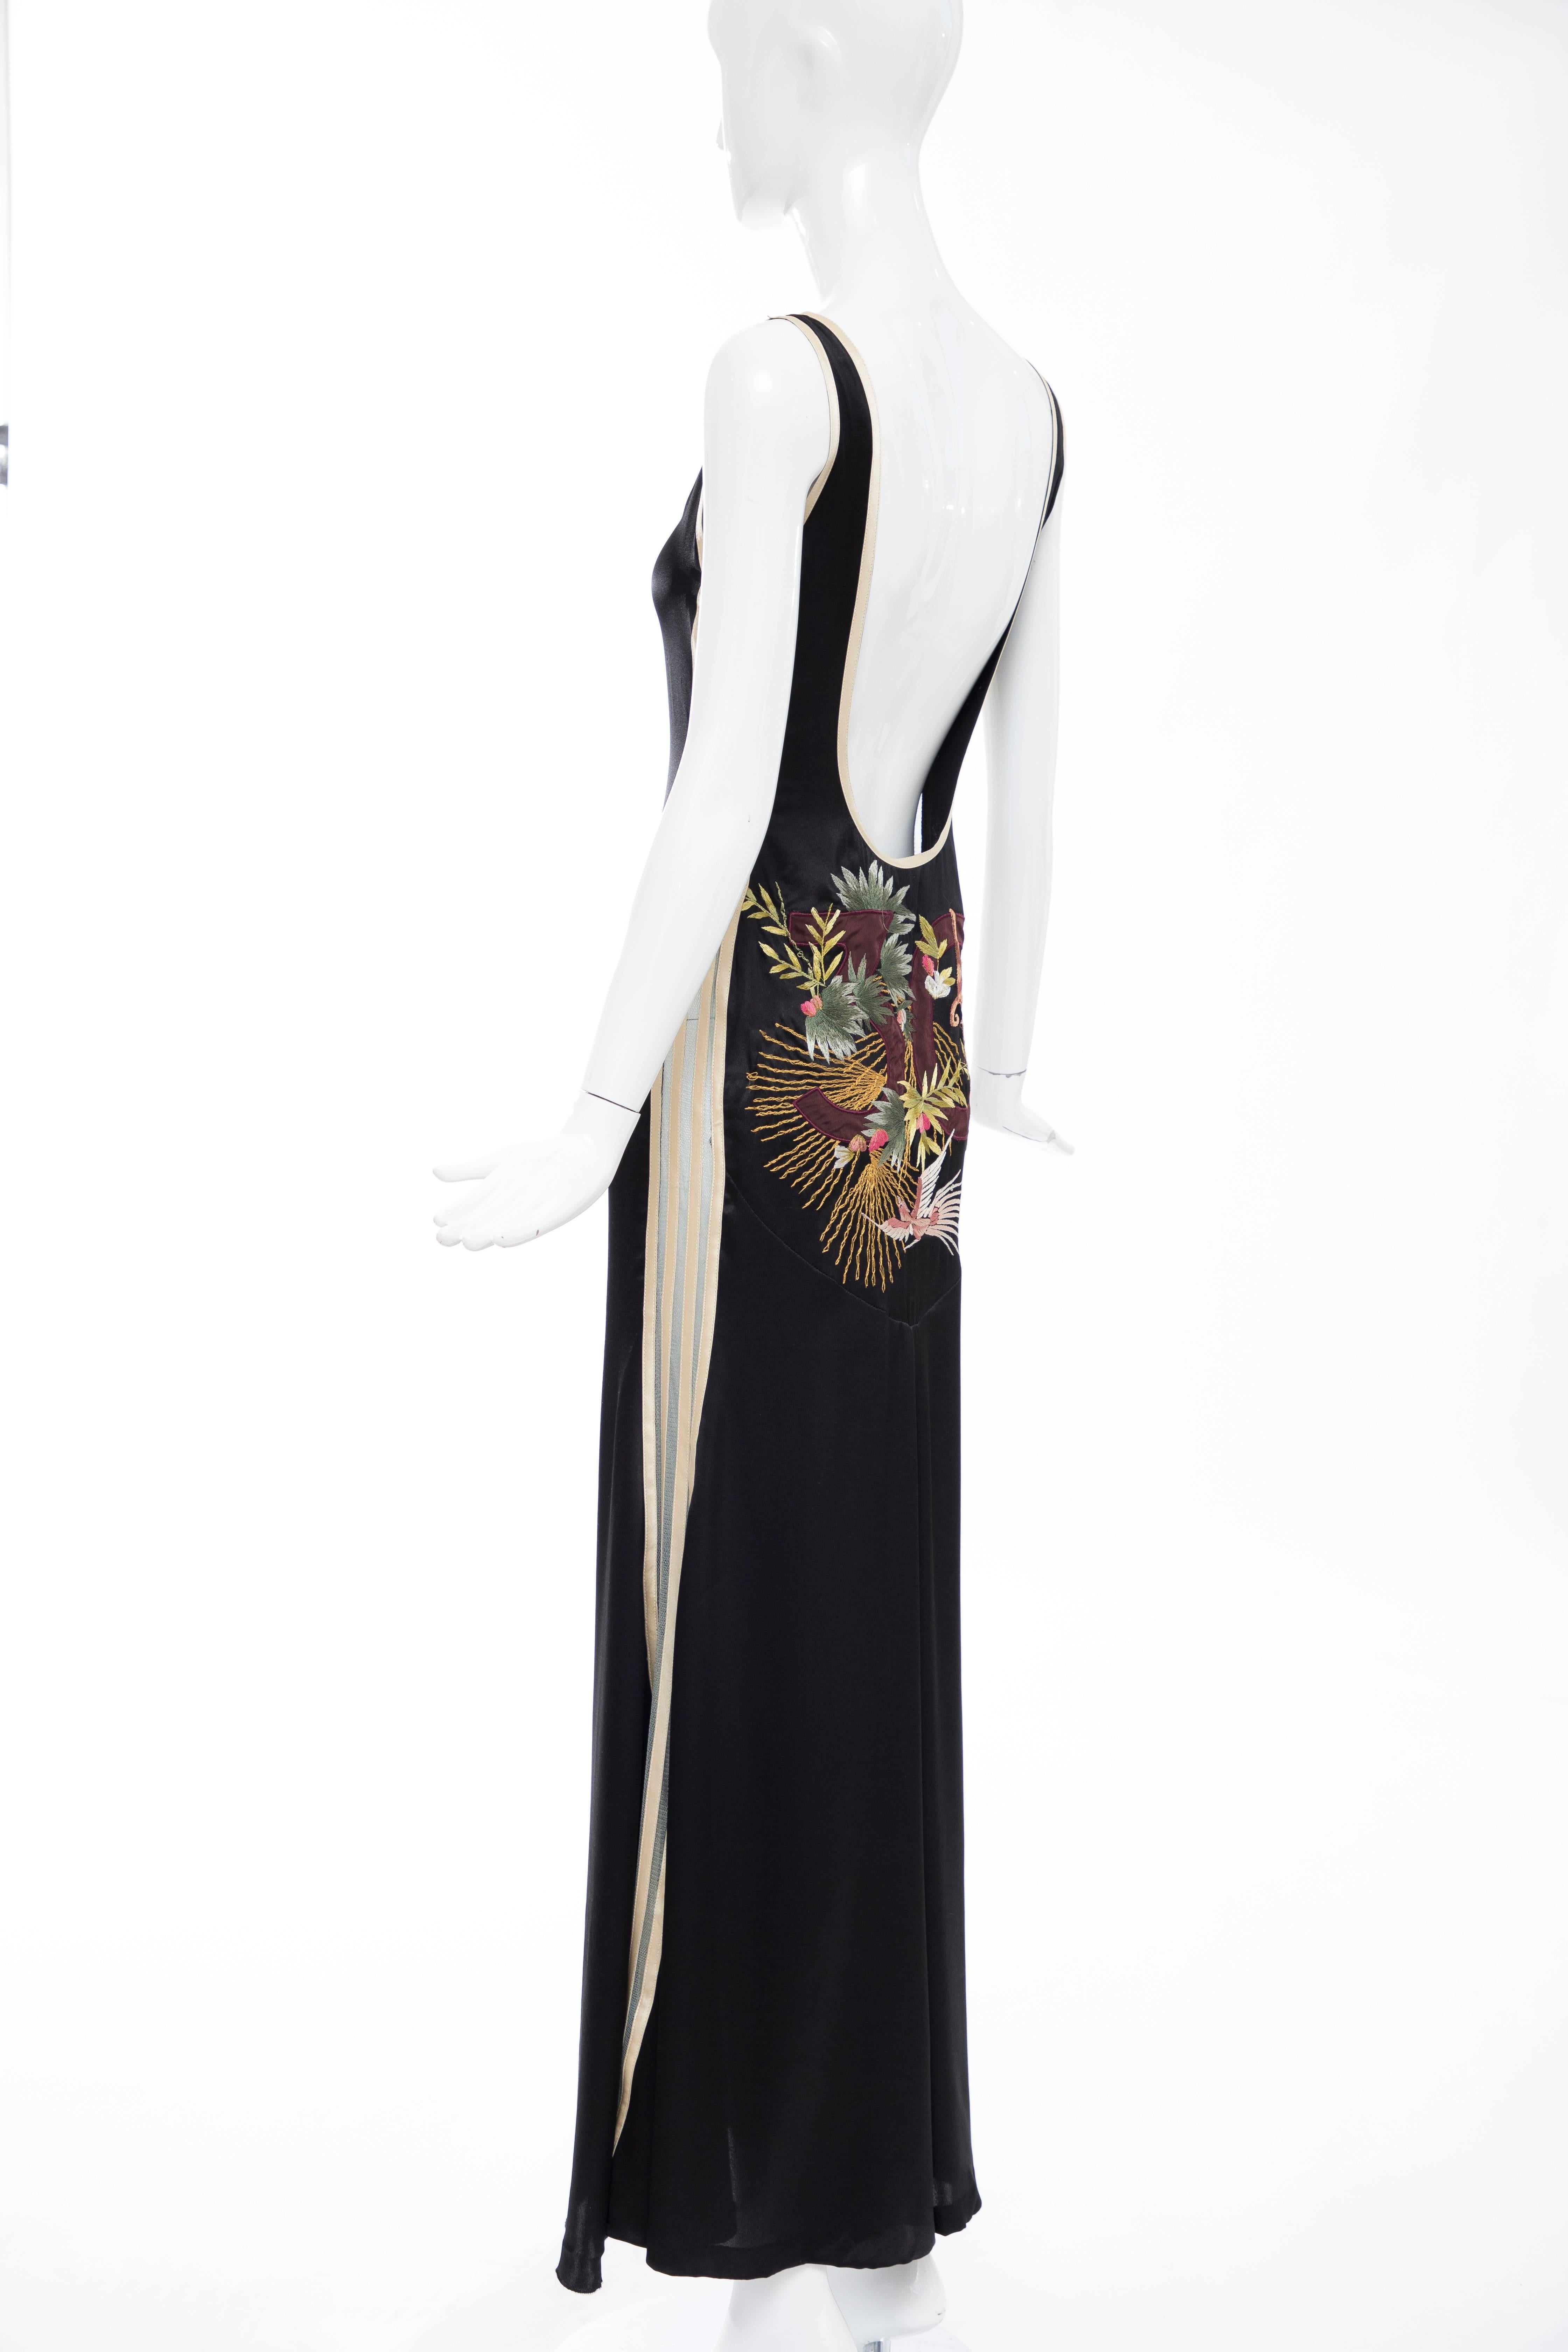 Black Jean Paul Gaultier Silk Embroidered Evening Dress, Spring 2007